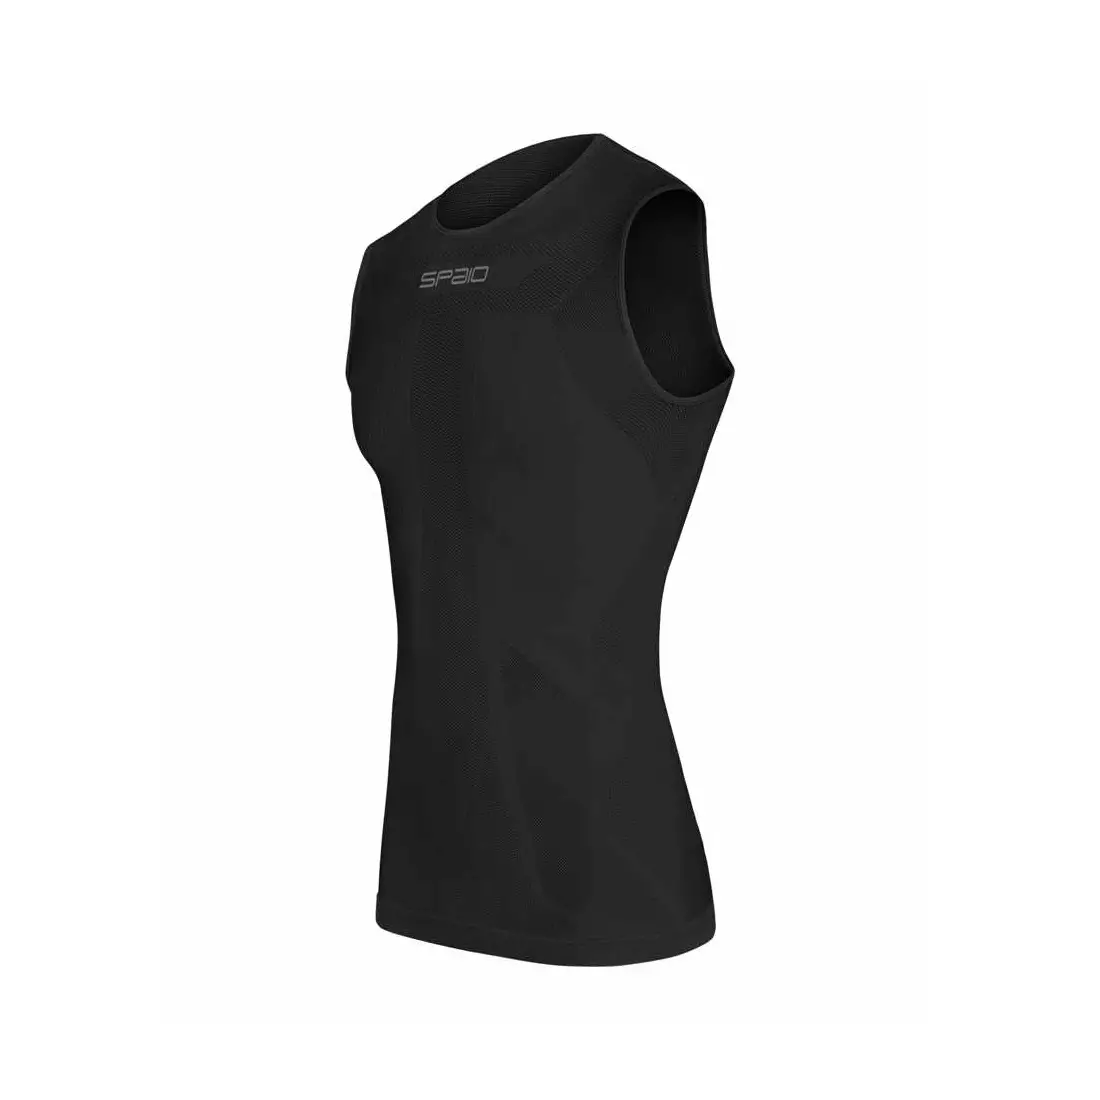 SPAIO base layer mens thermal underwear jersey AIR black